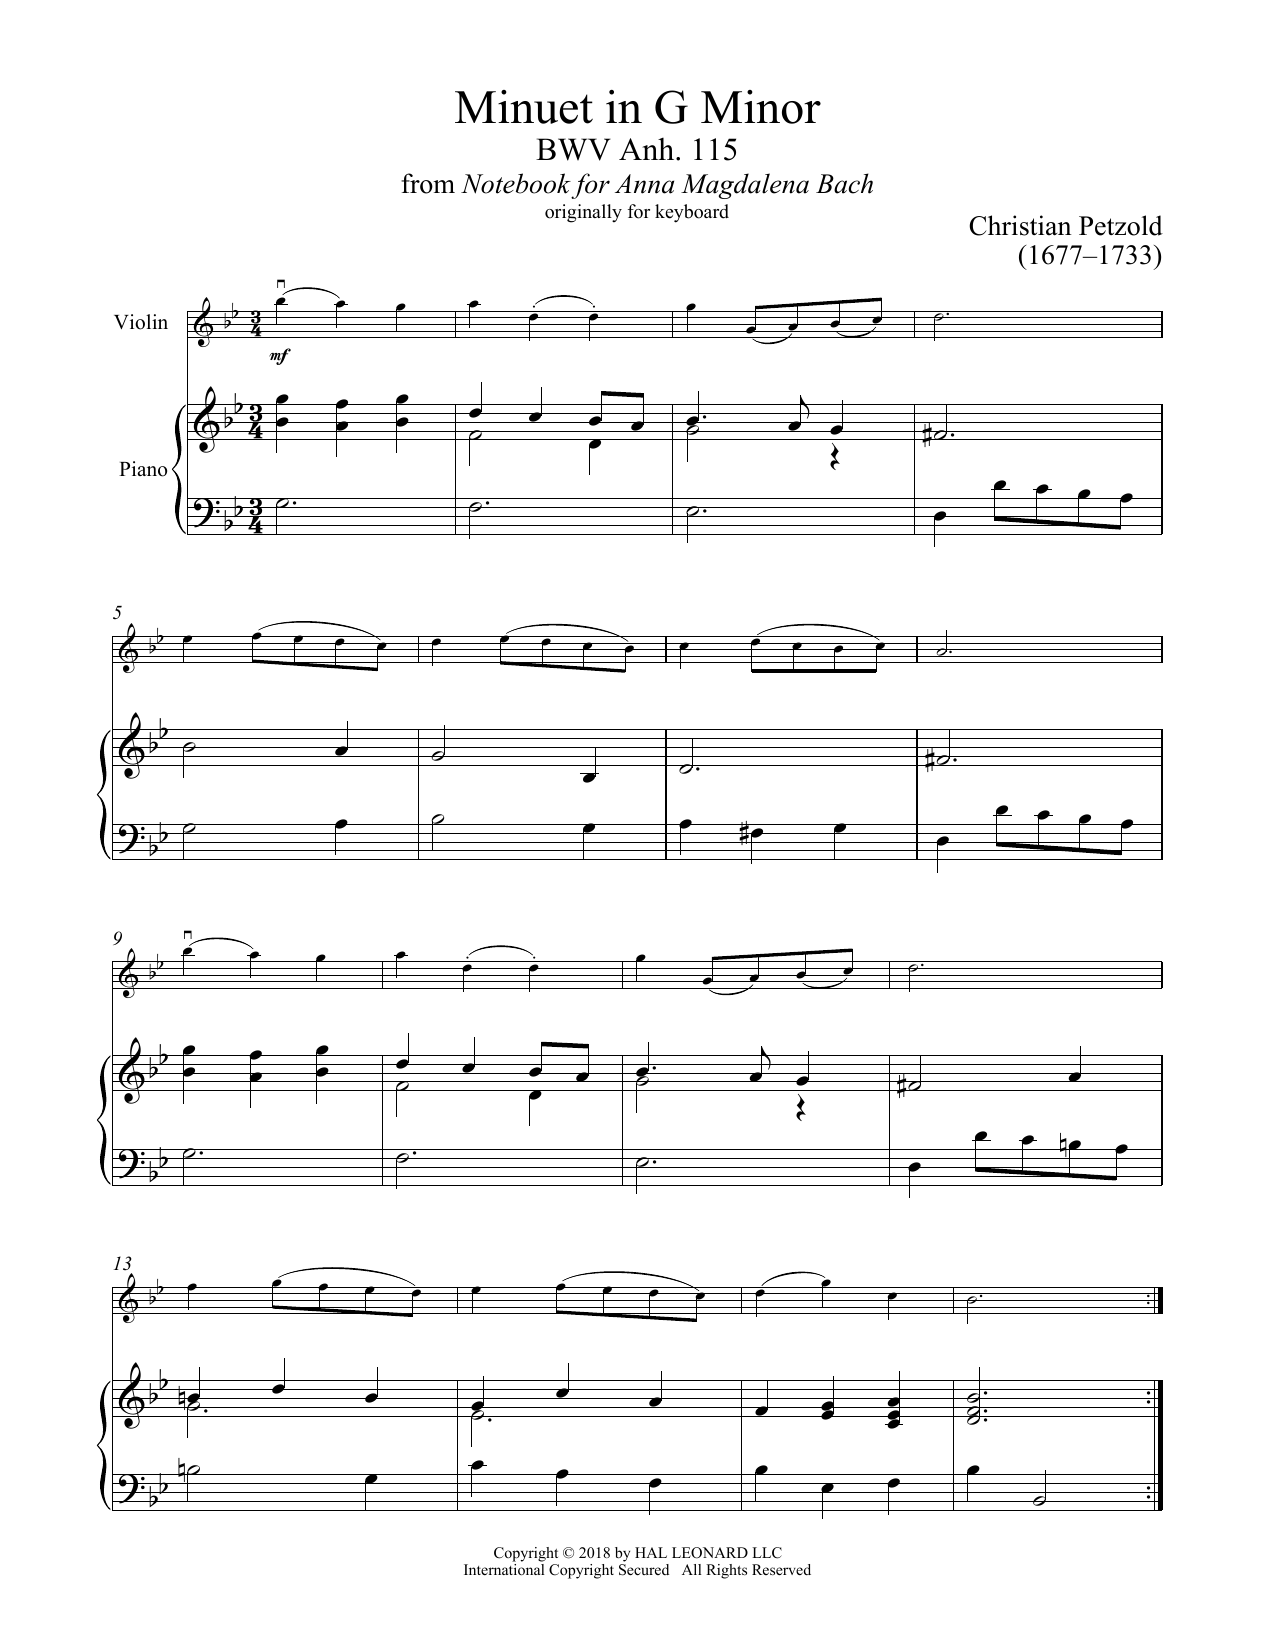 Minuet in G minor, BWV Anh. 115 sheet music